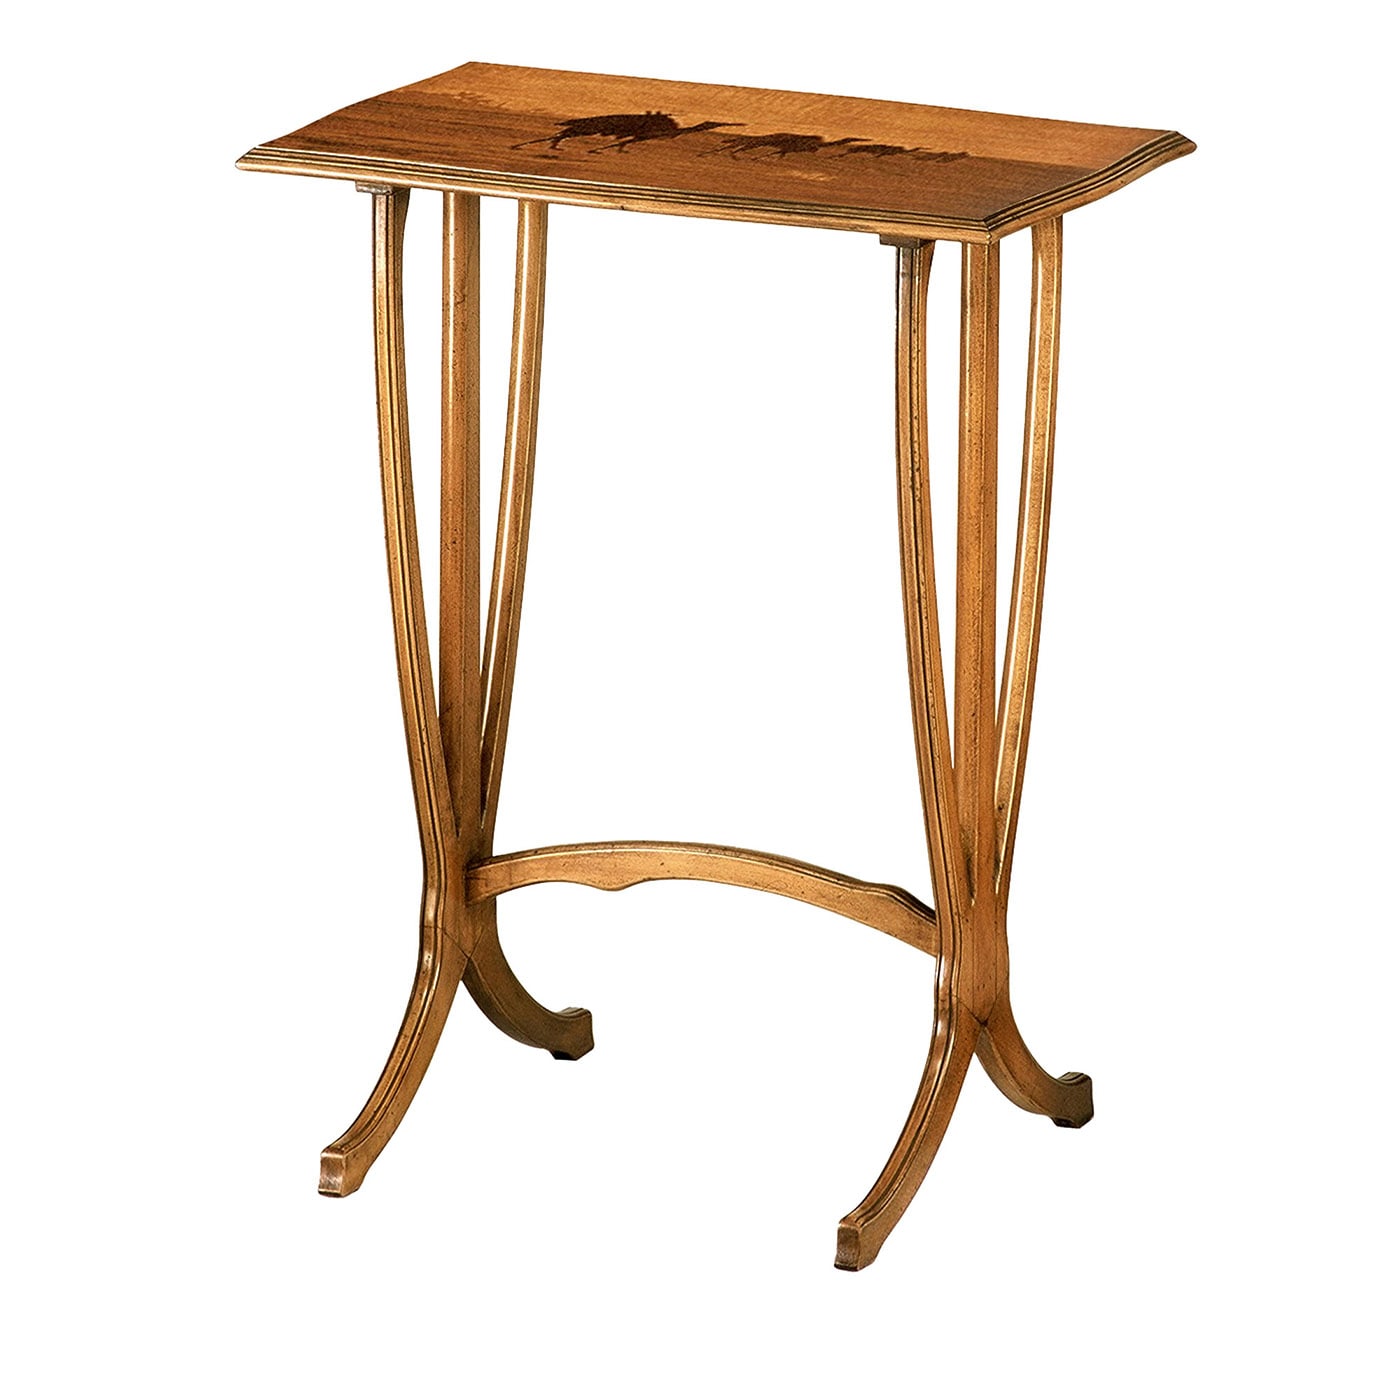 French Art Nouveau-Style Side Table by Emile Gallè #6 - Cugini Lanzani